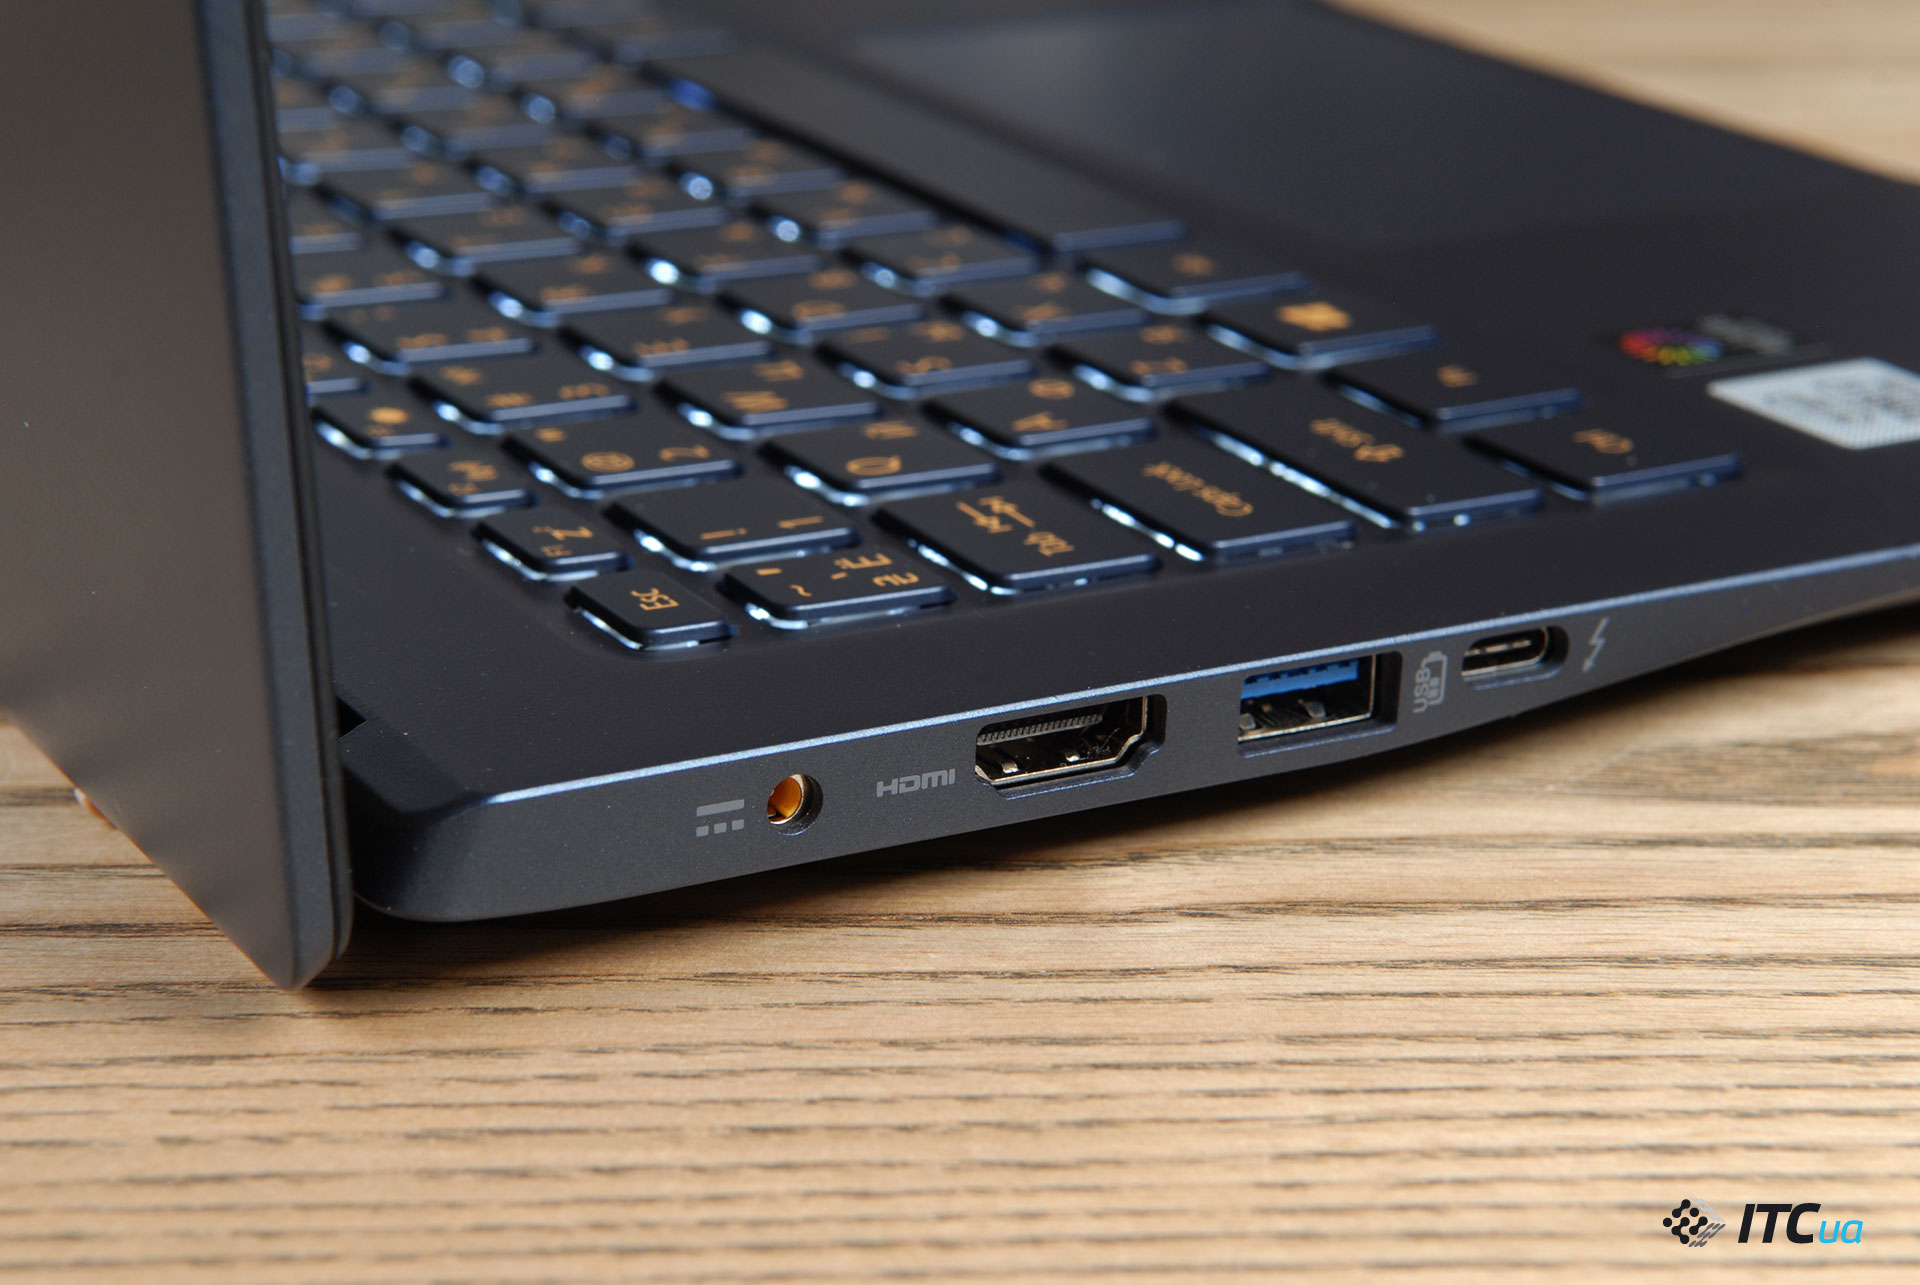 Acer Swift 5 (SF514-54T) - обзор компактного ноутбука